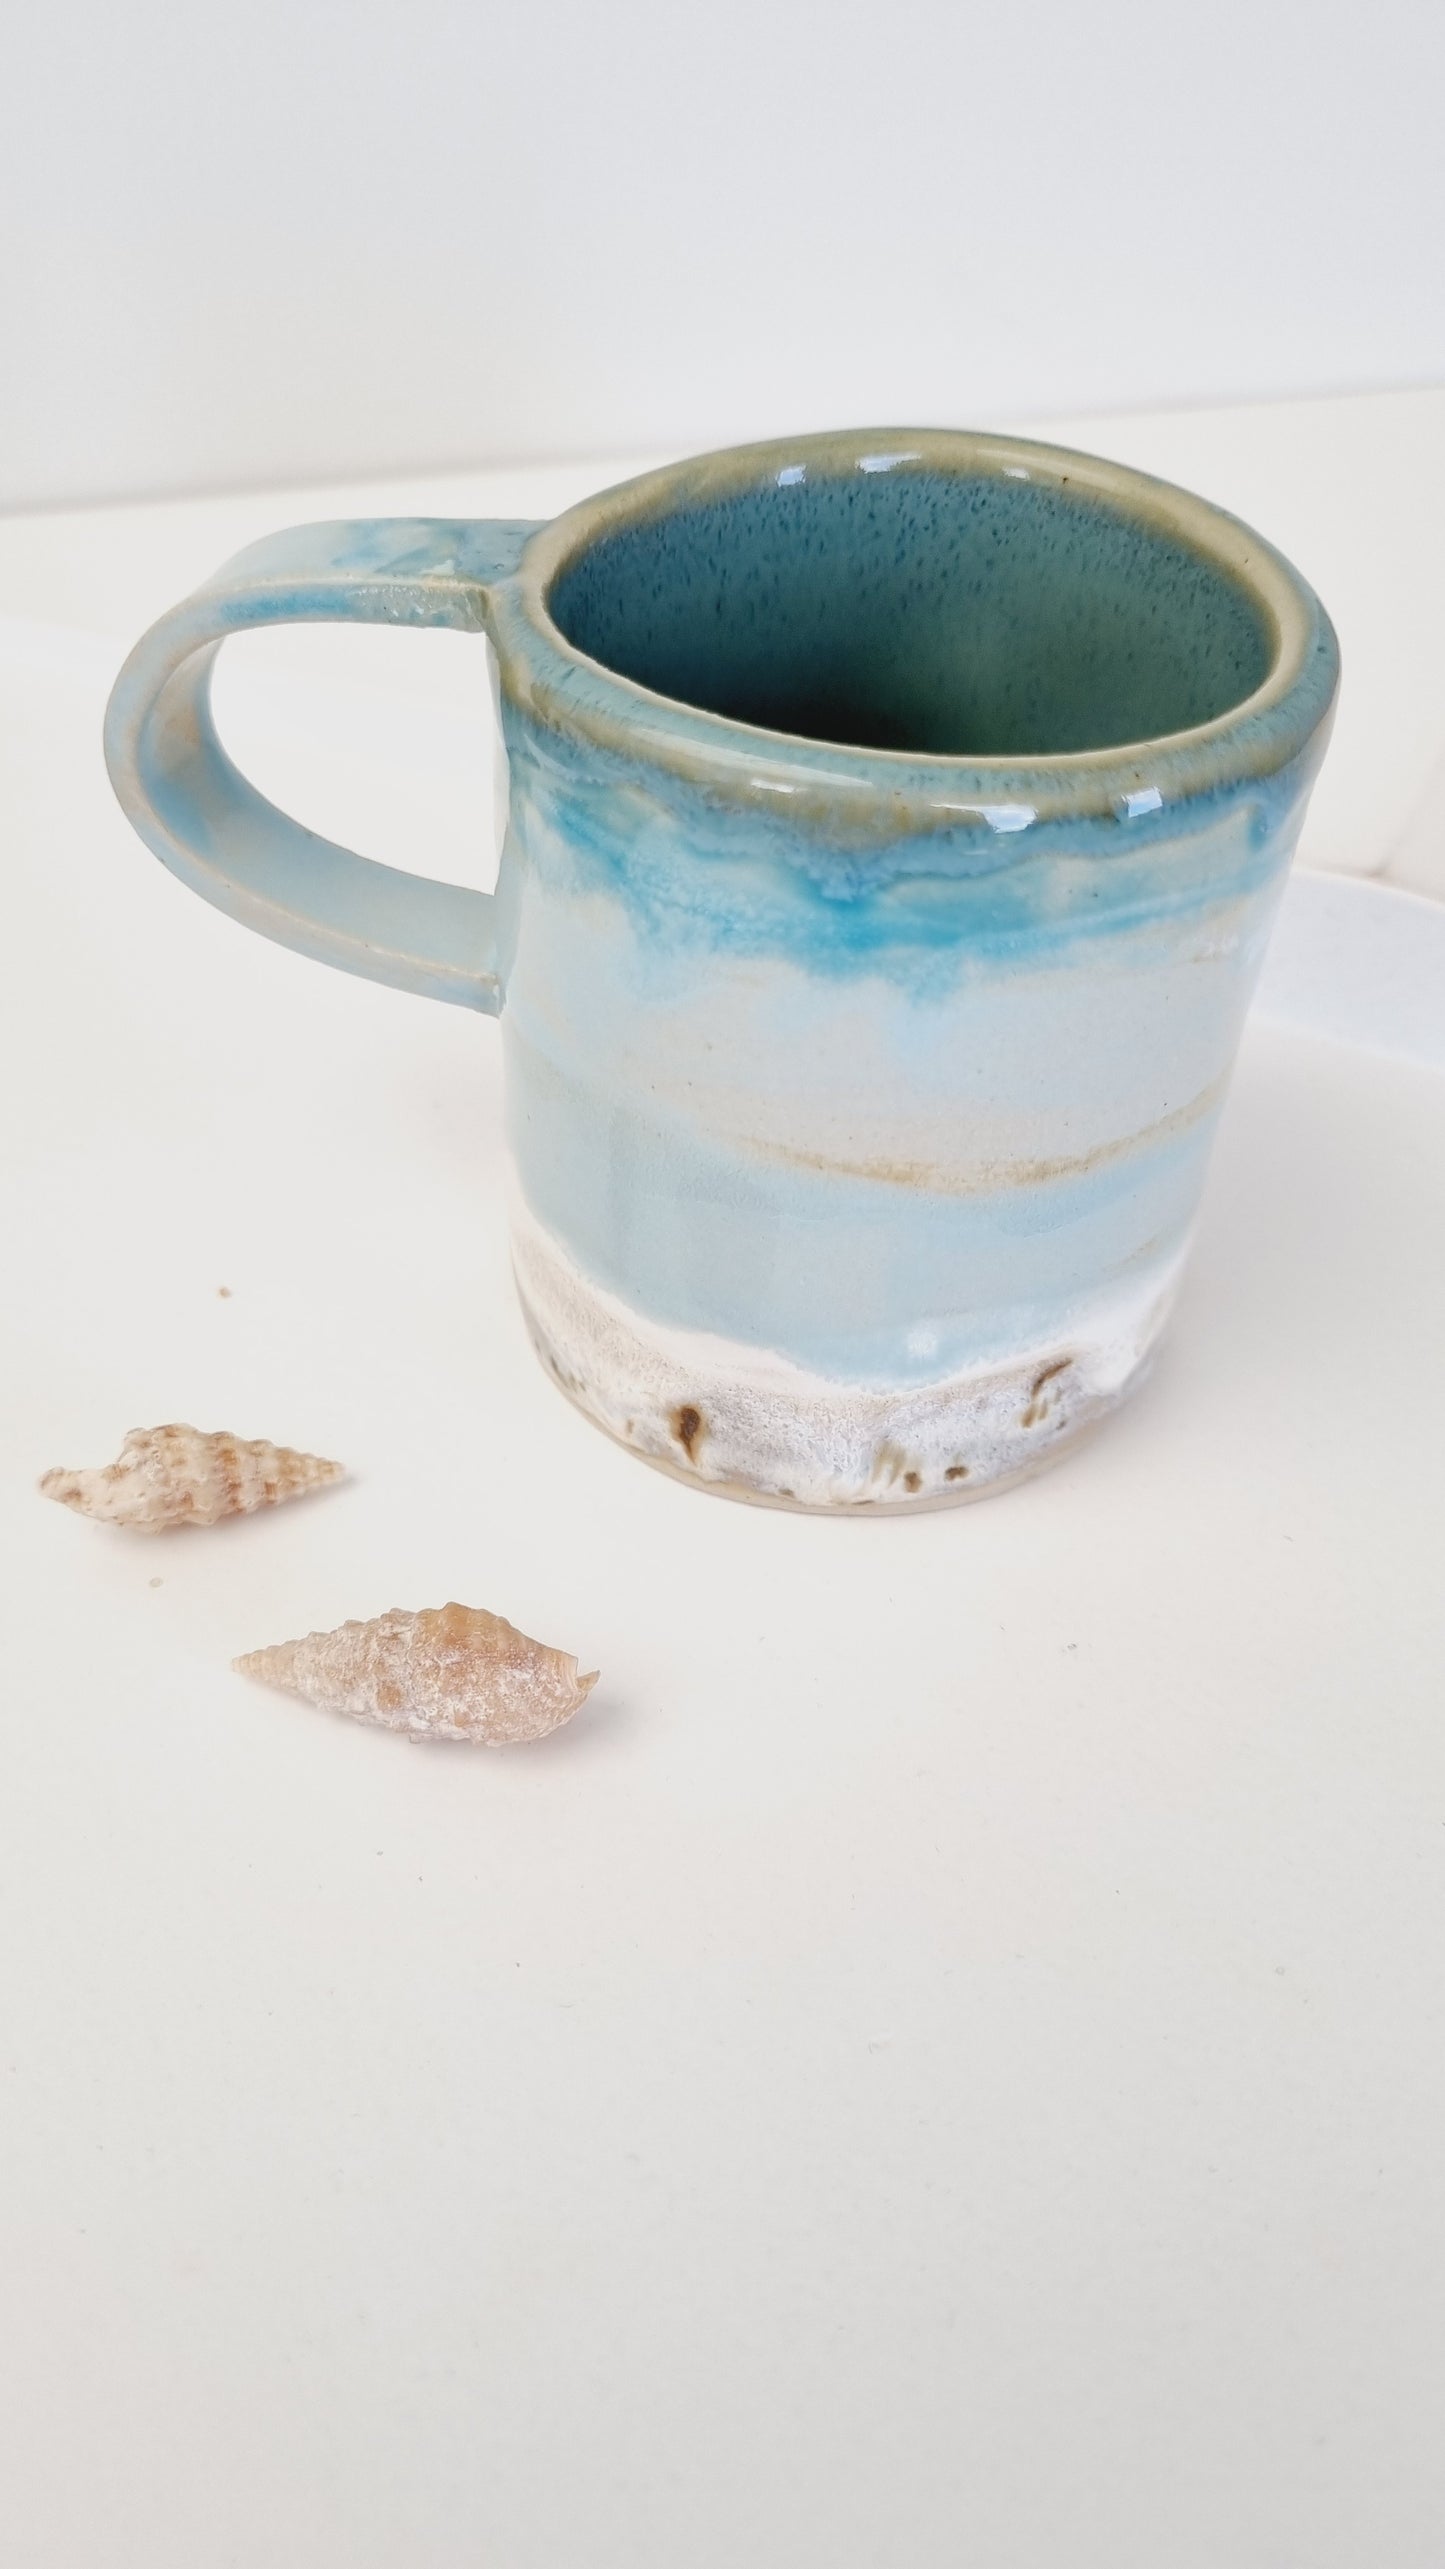 Beachy ocean mug, small blue turquoise handmade and handpainted cup